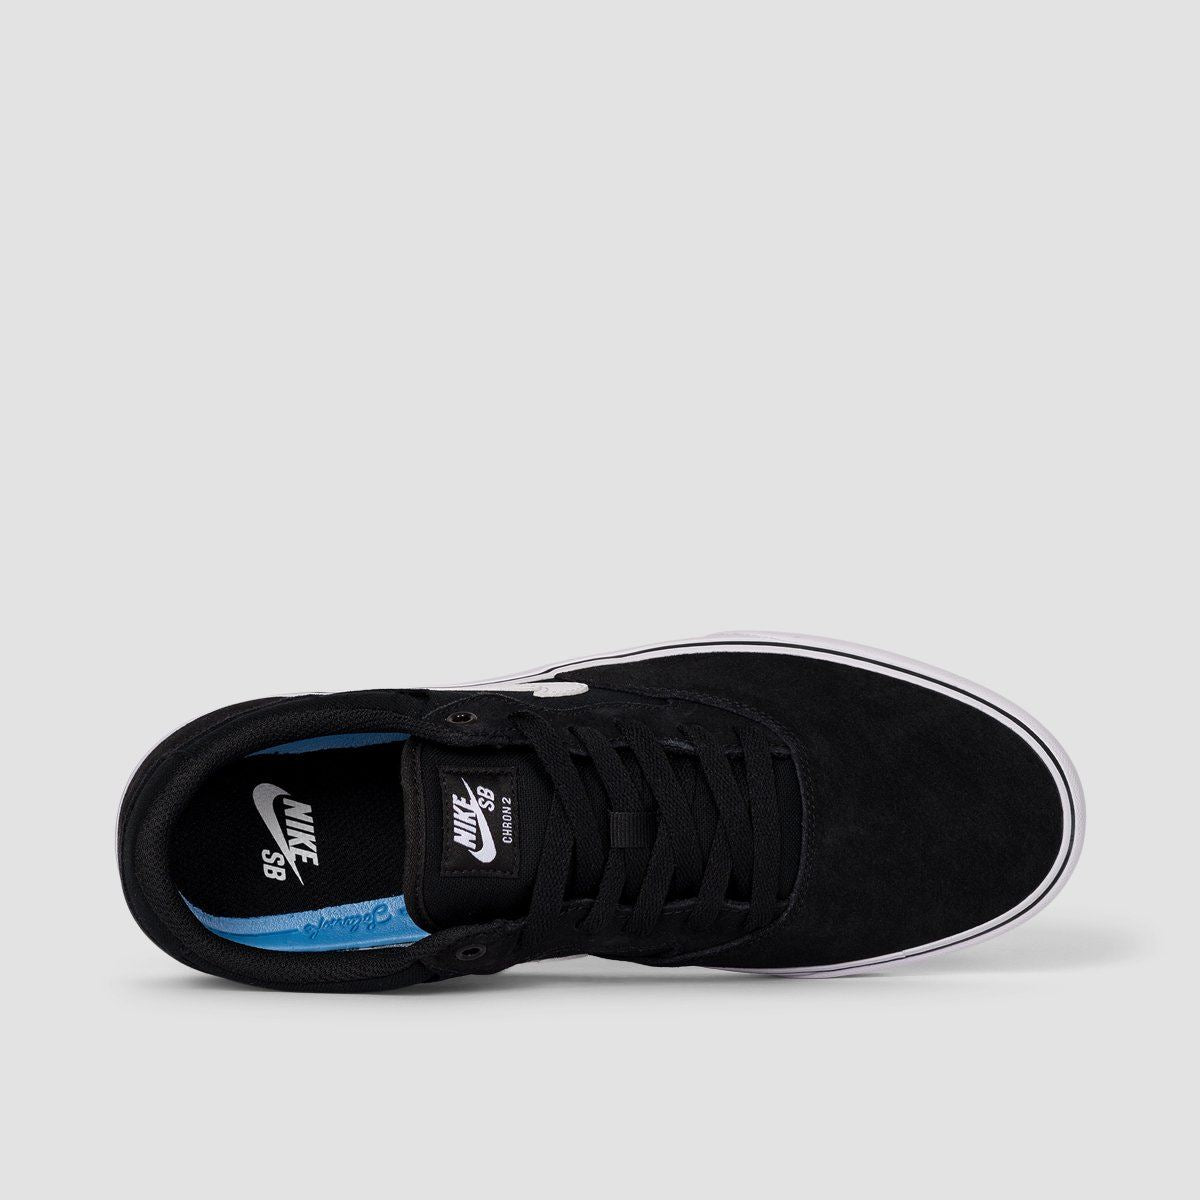 Nike SB Chron 2 Shoes - Black/White/Black